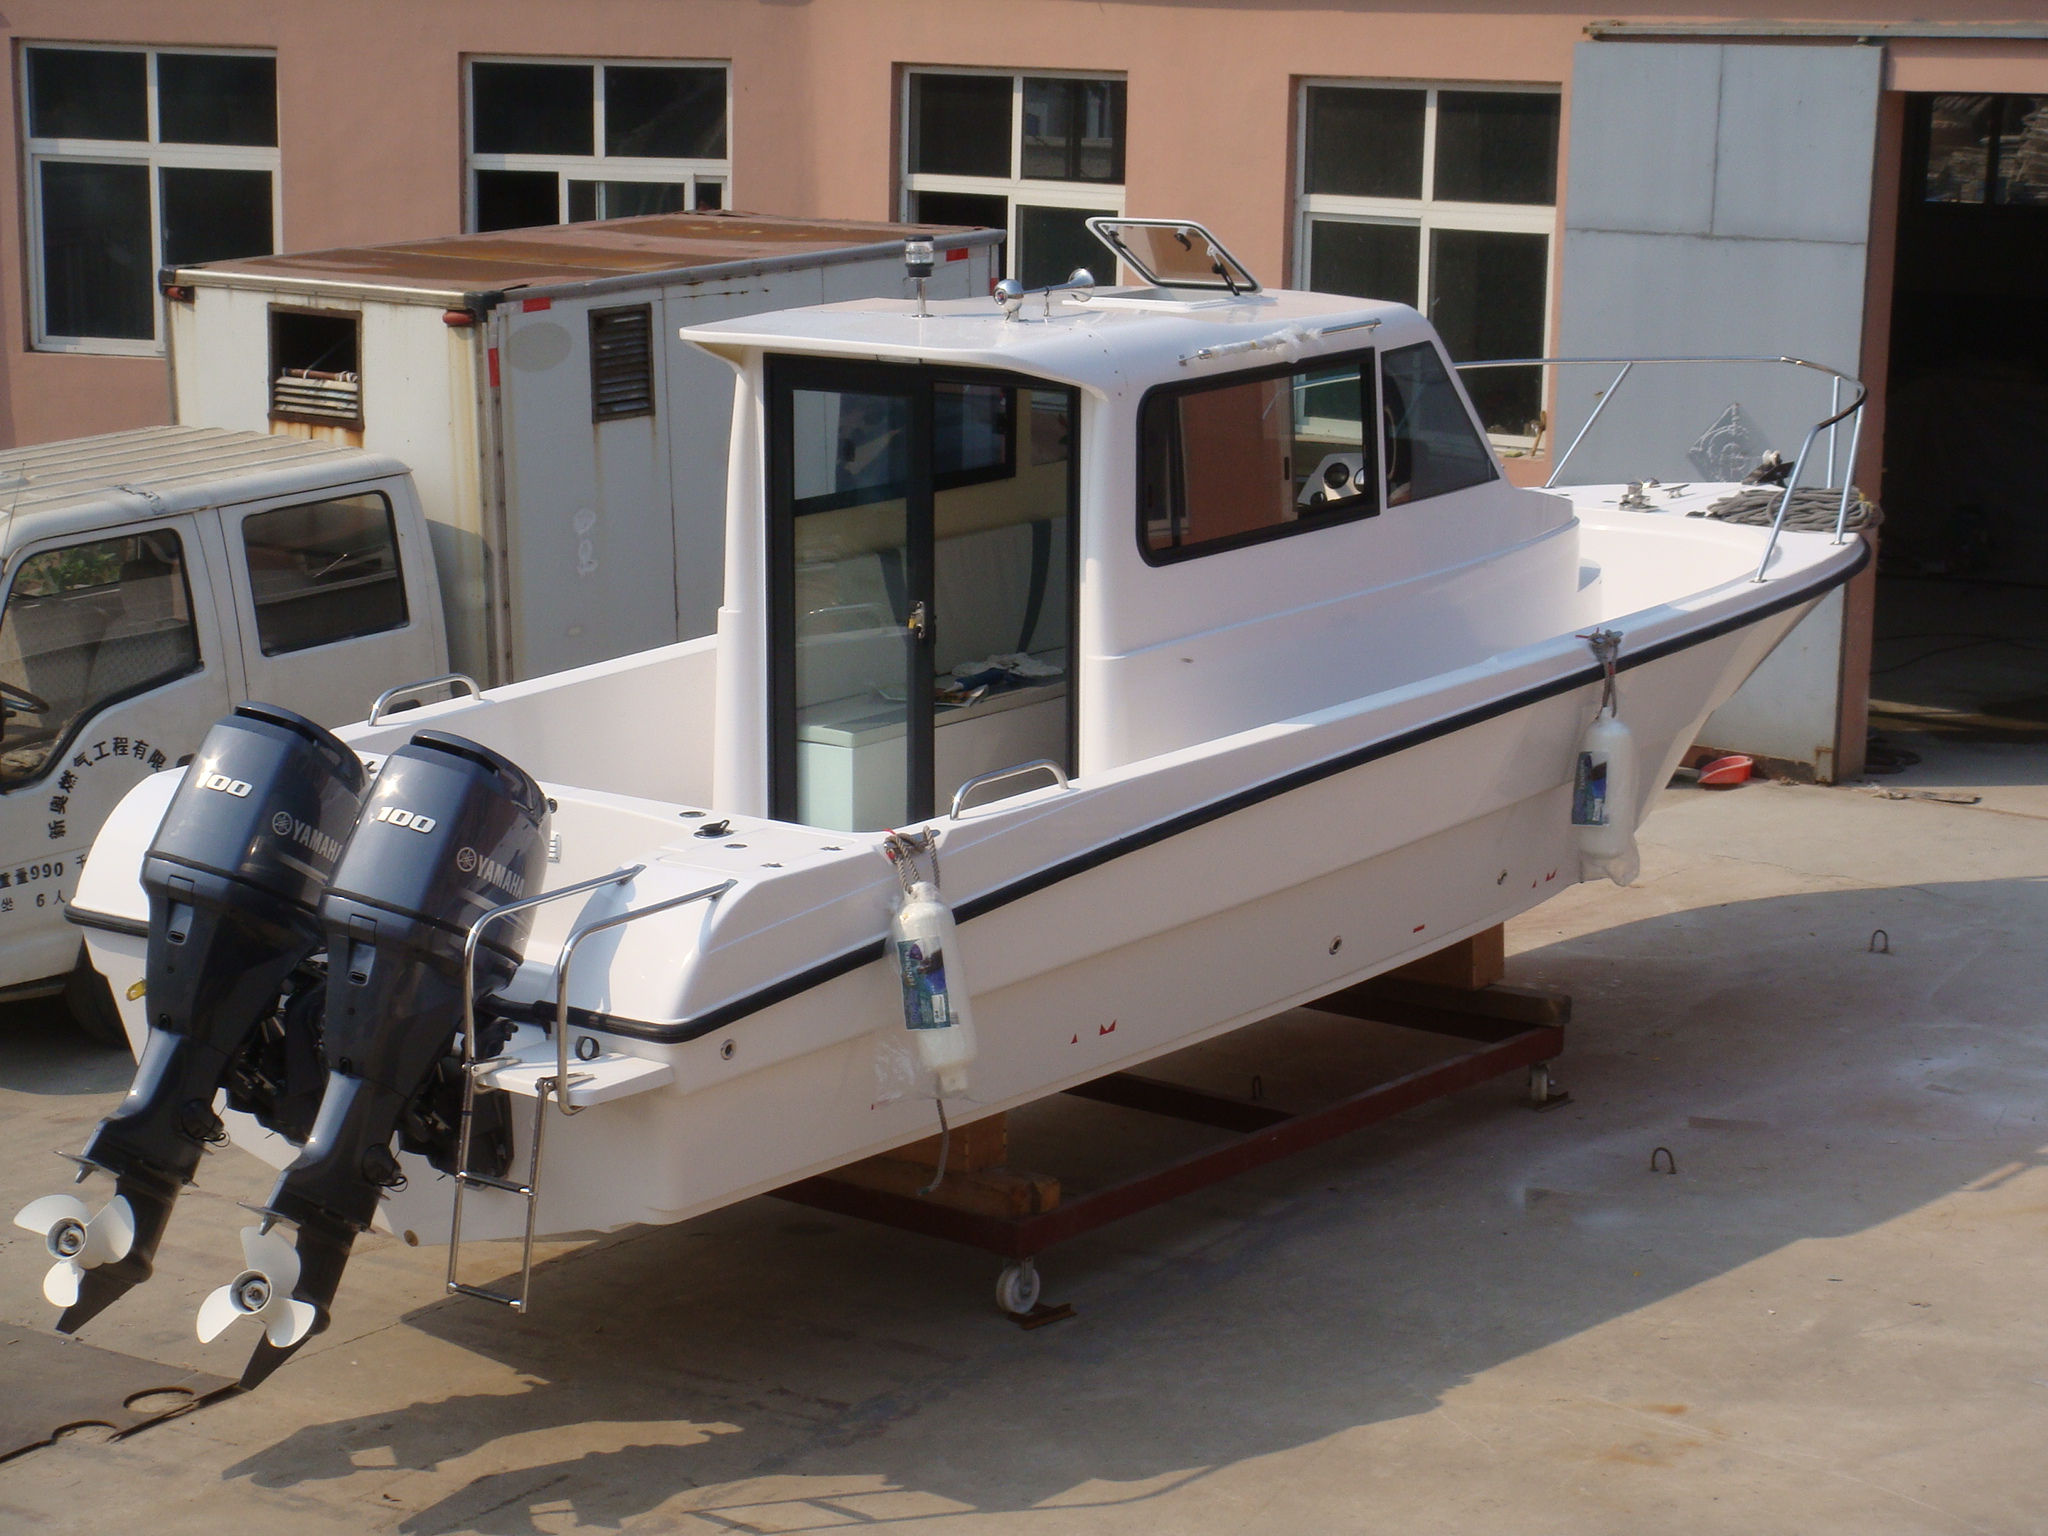 Grandsea 27ft /8.3m Fiberglass Cabin Fishing Boat for Sale 